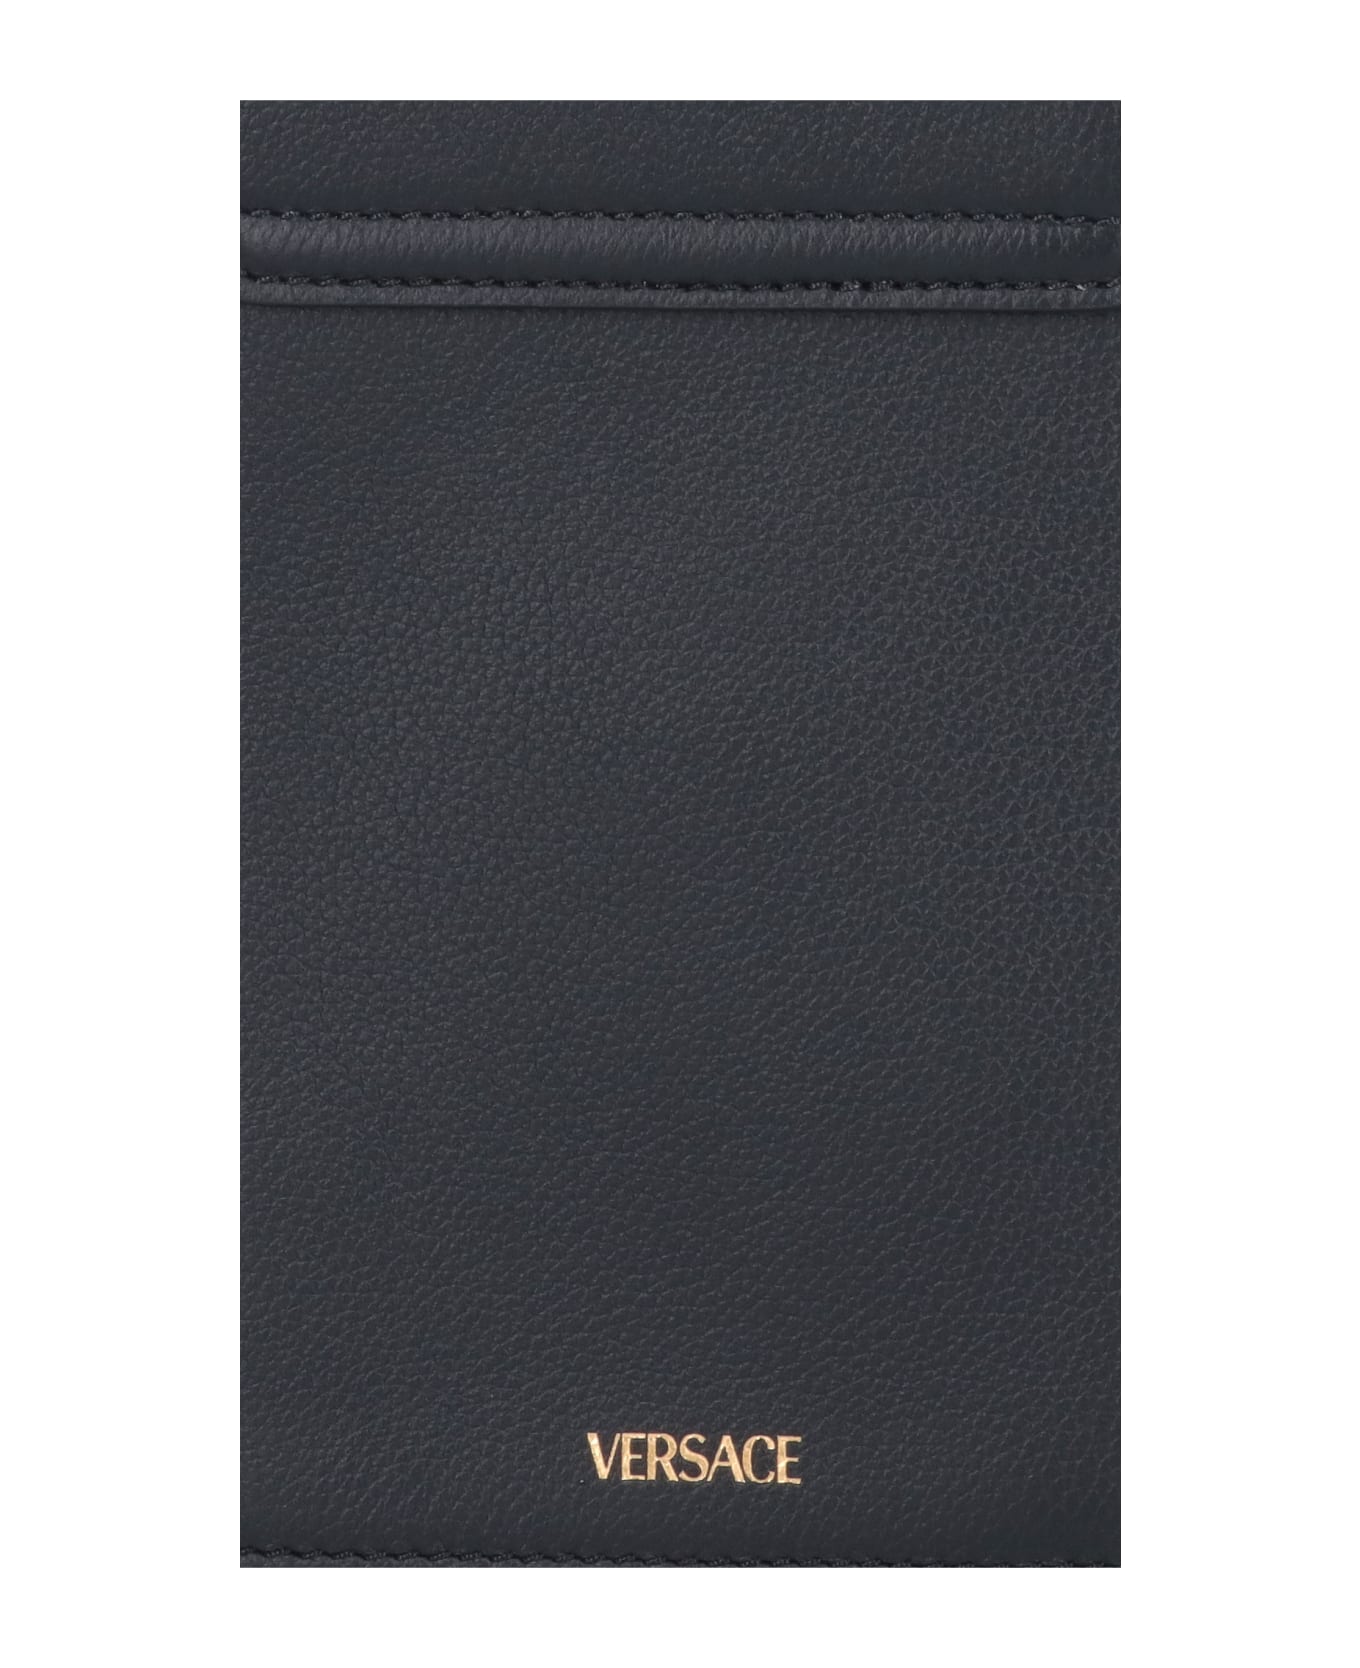 Versace Hi-Tech Accessory - Black